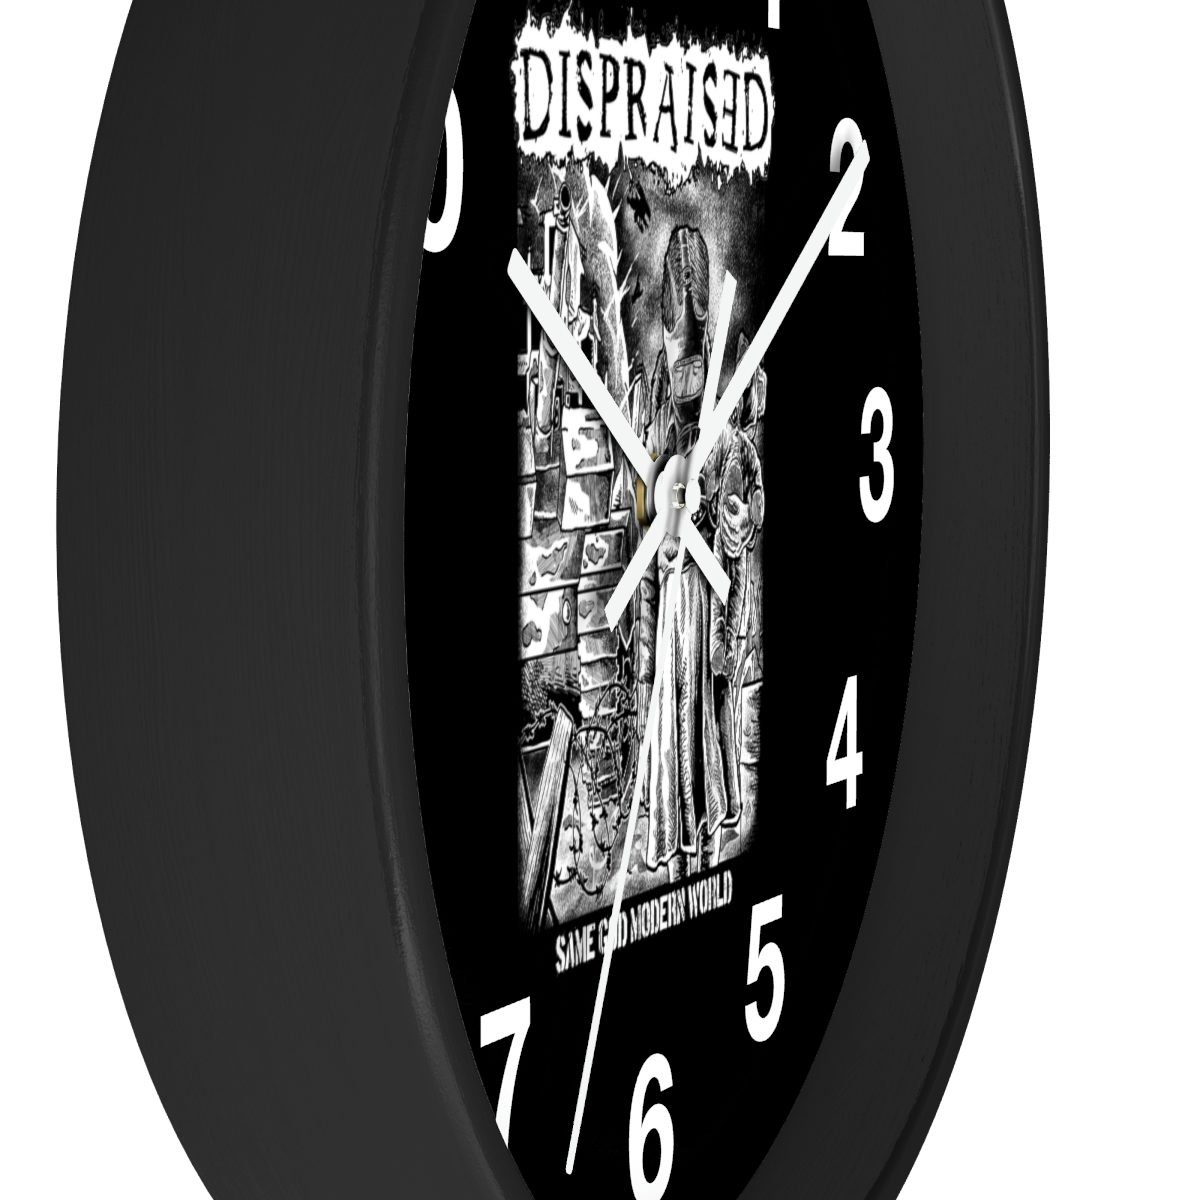 Dispraised – Same God Modern World Wall clock